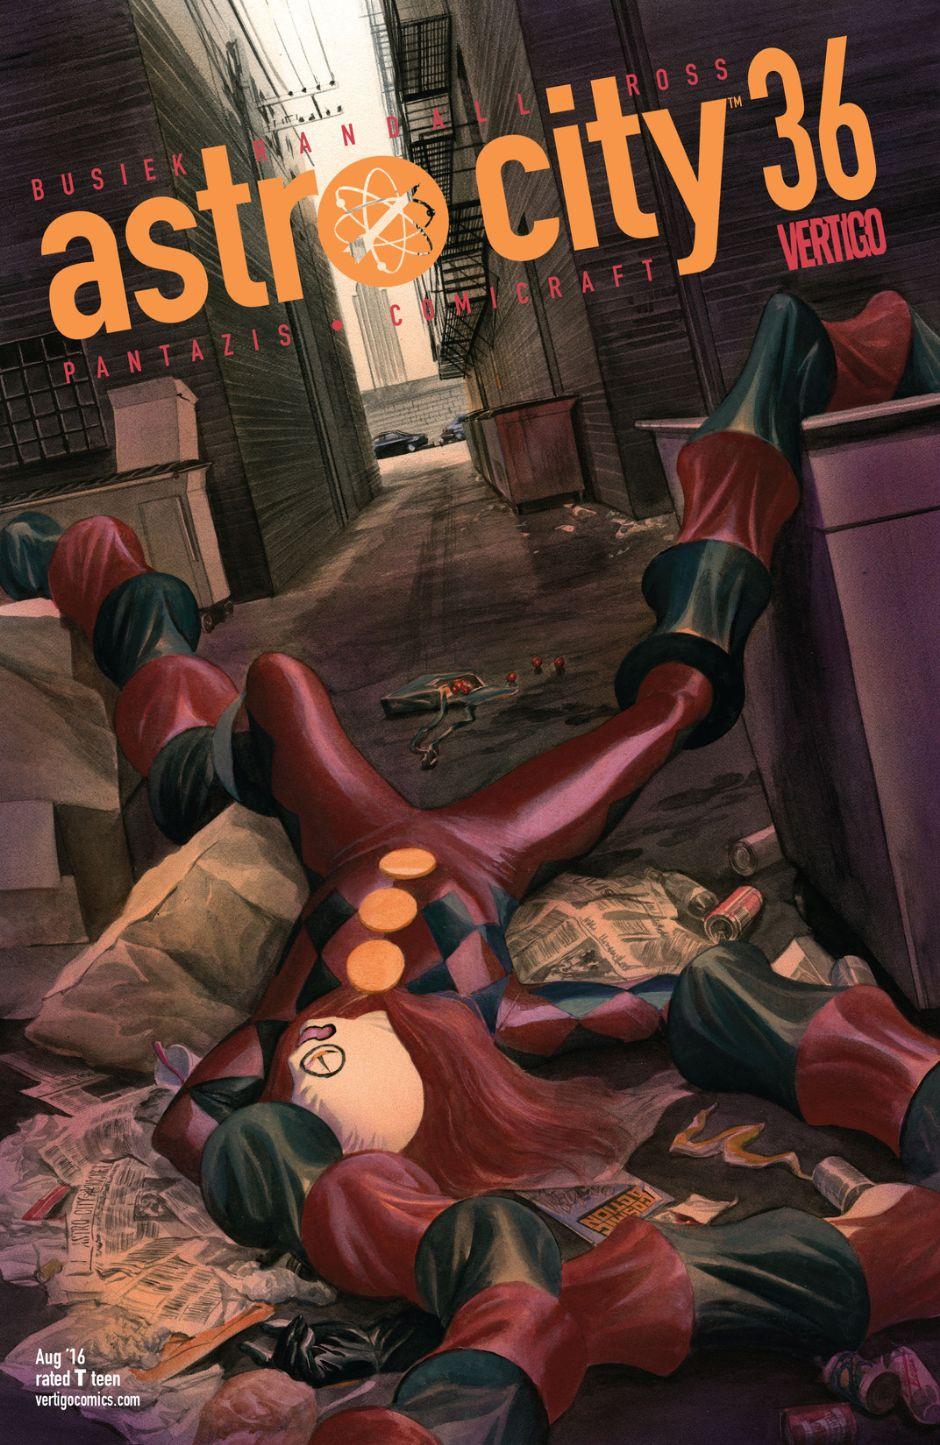 Astro City Vol. 3 #36